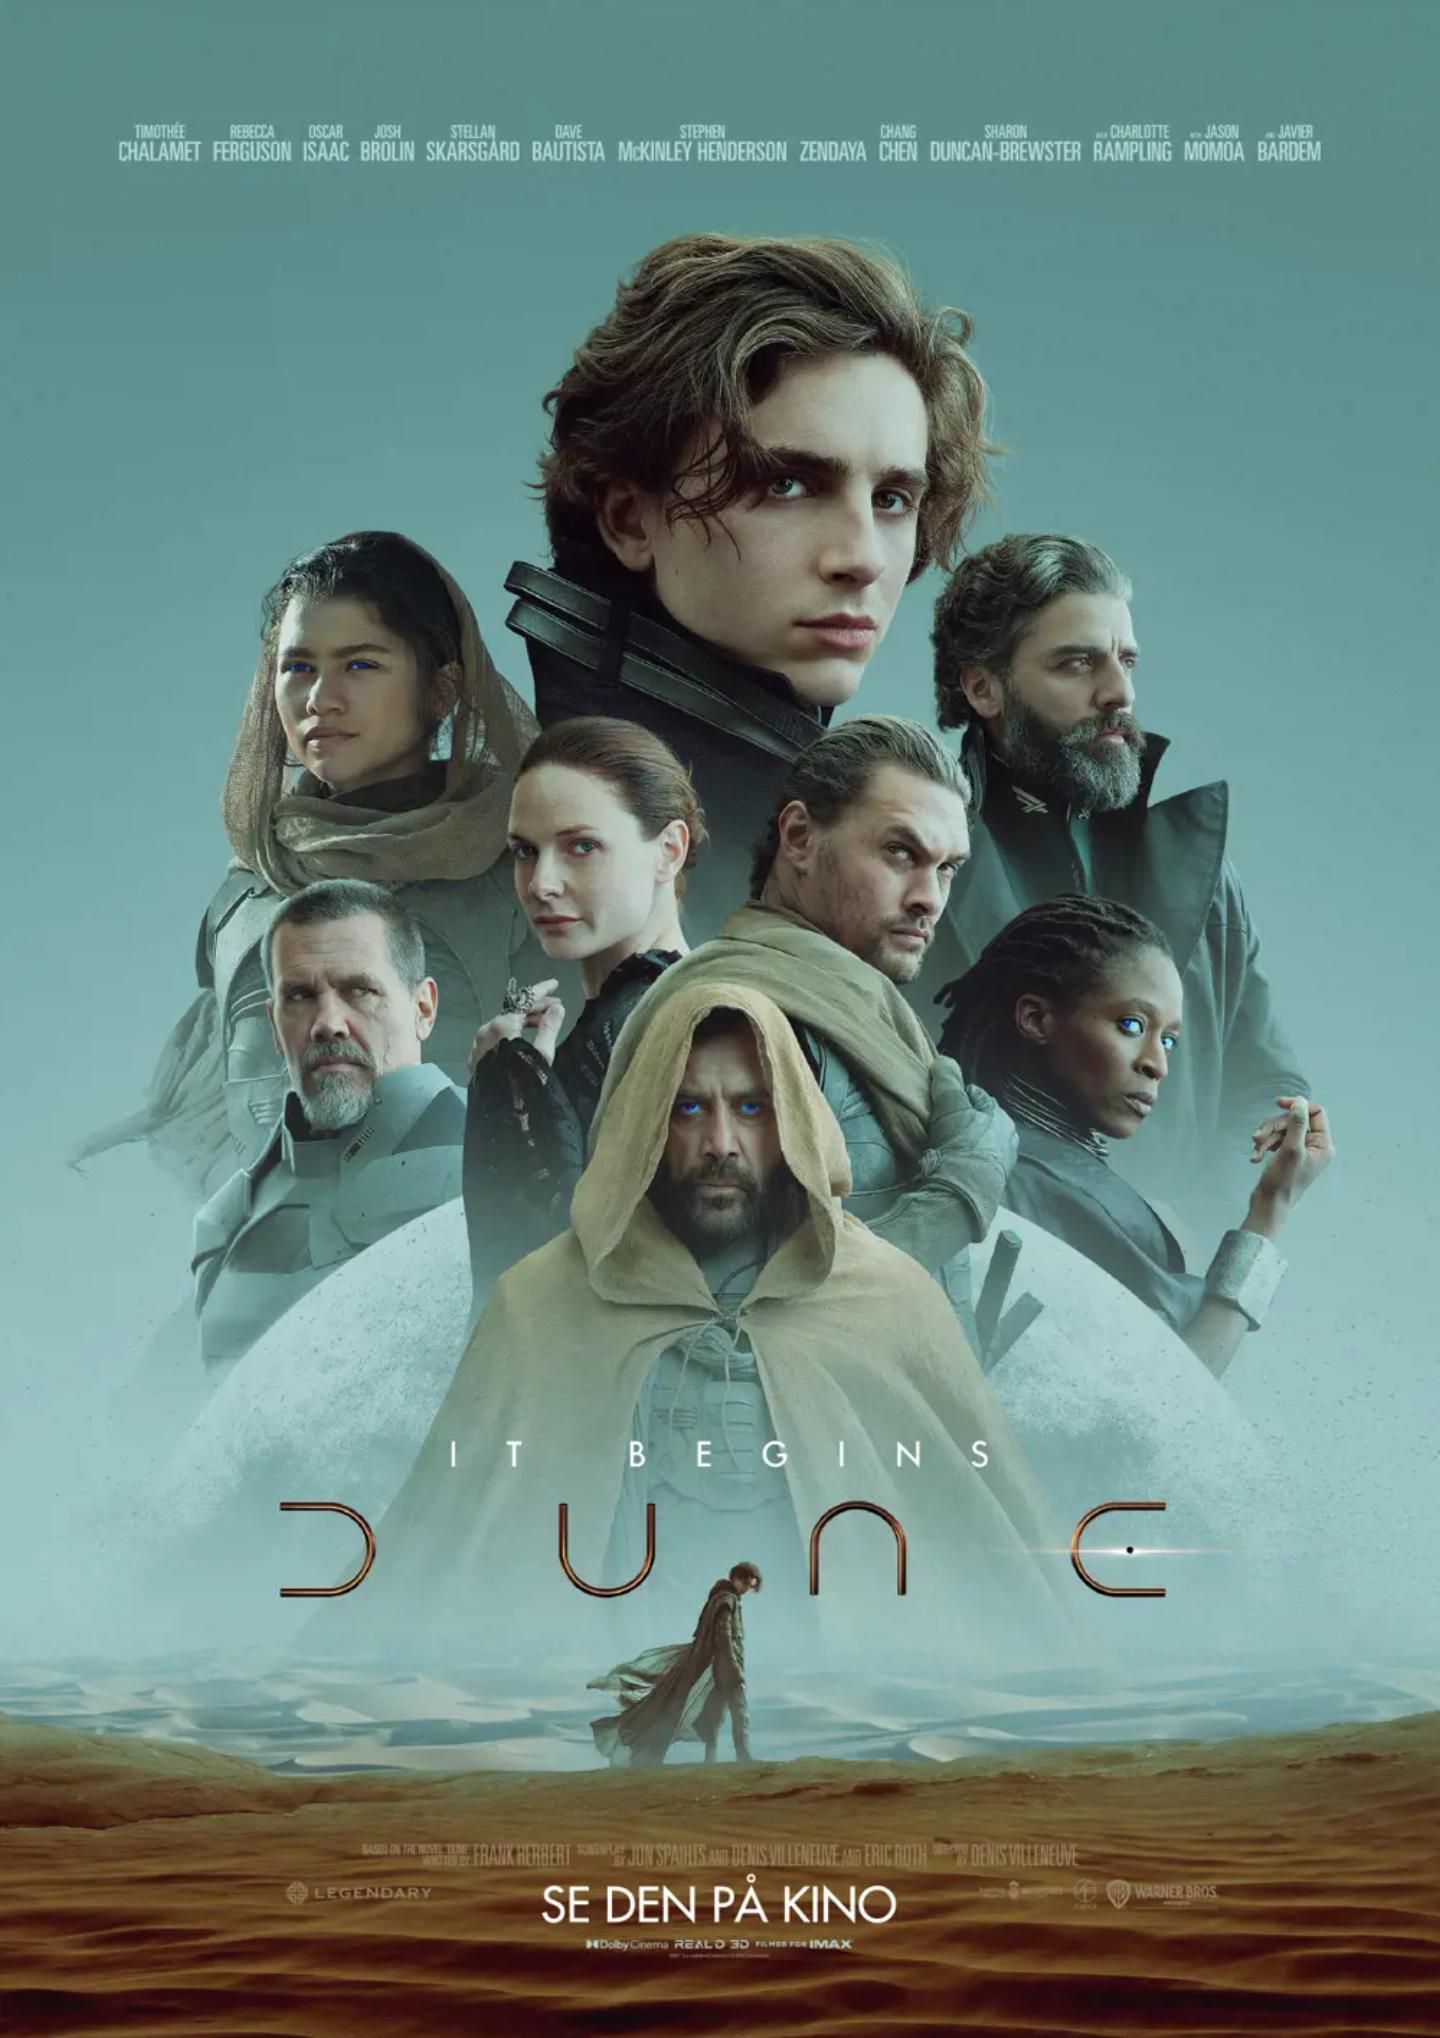 Plakat for 'Dune: Part One'